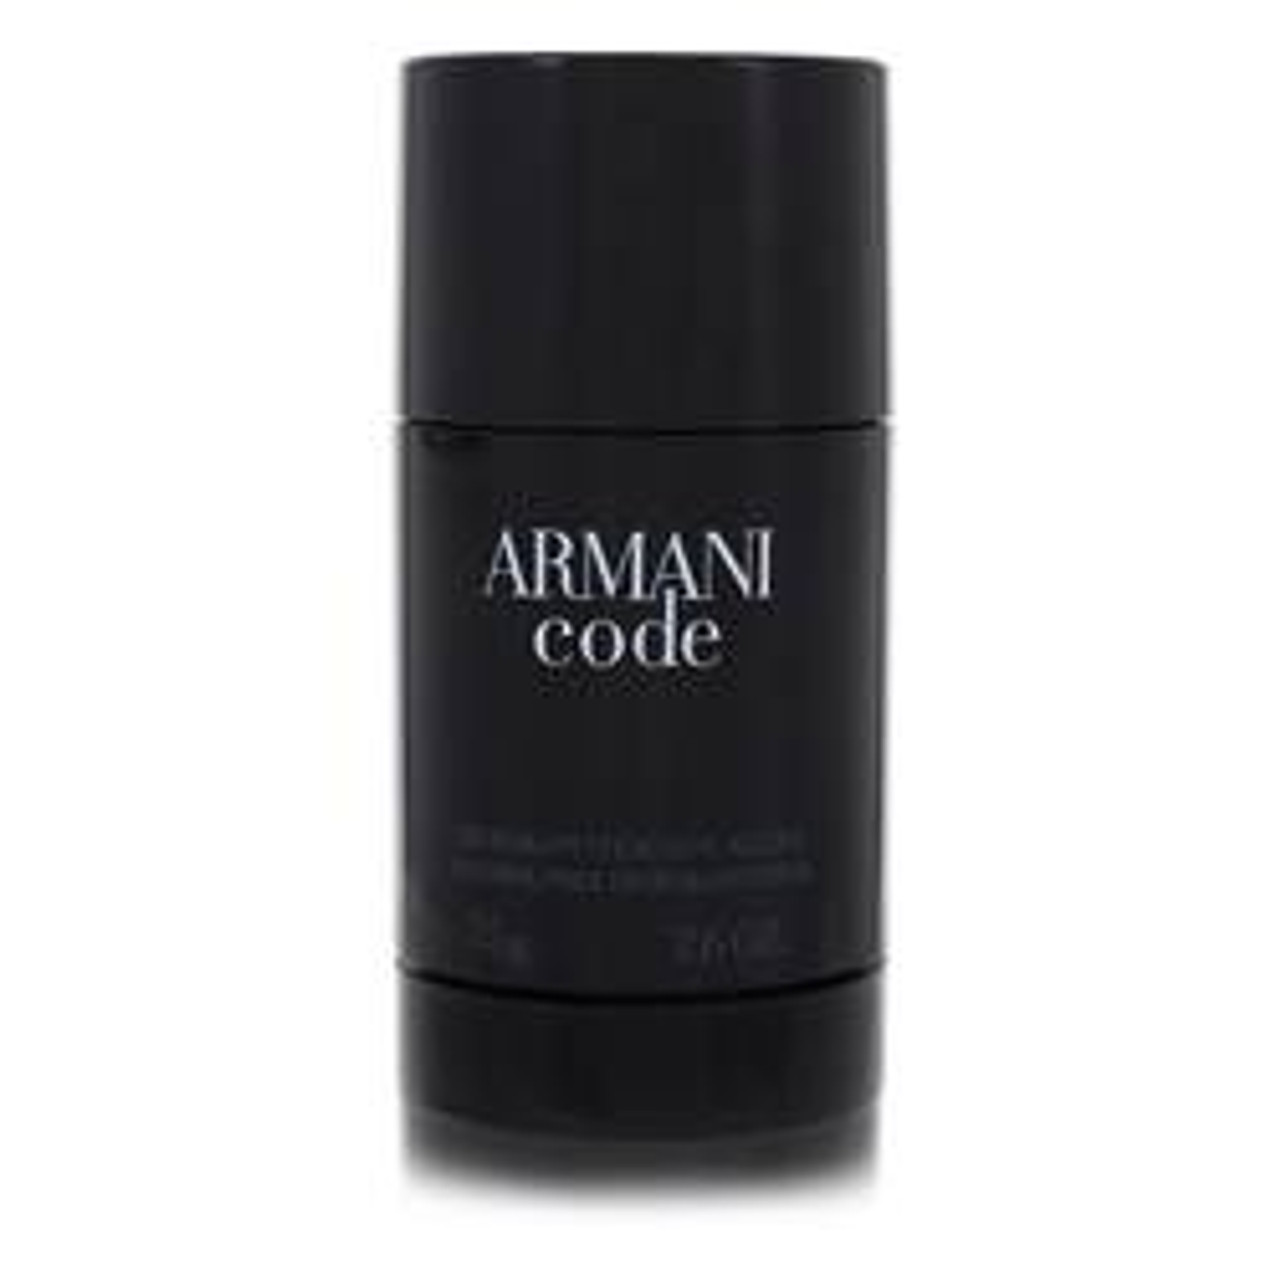 Armani Code Cologne By Giorgio Armani Deodorant Stick 2.6 oz for Men - [From 88.00 - Choose pk Qty ] - *Ships from Miami